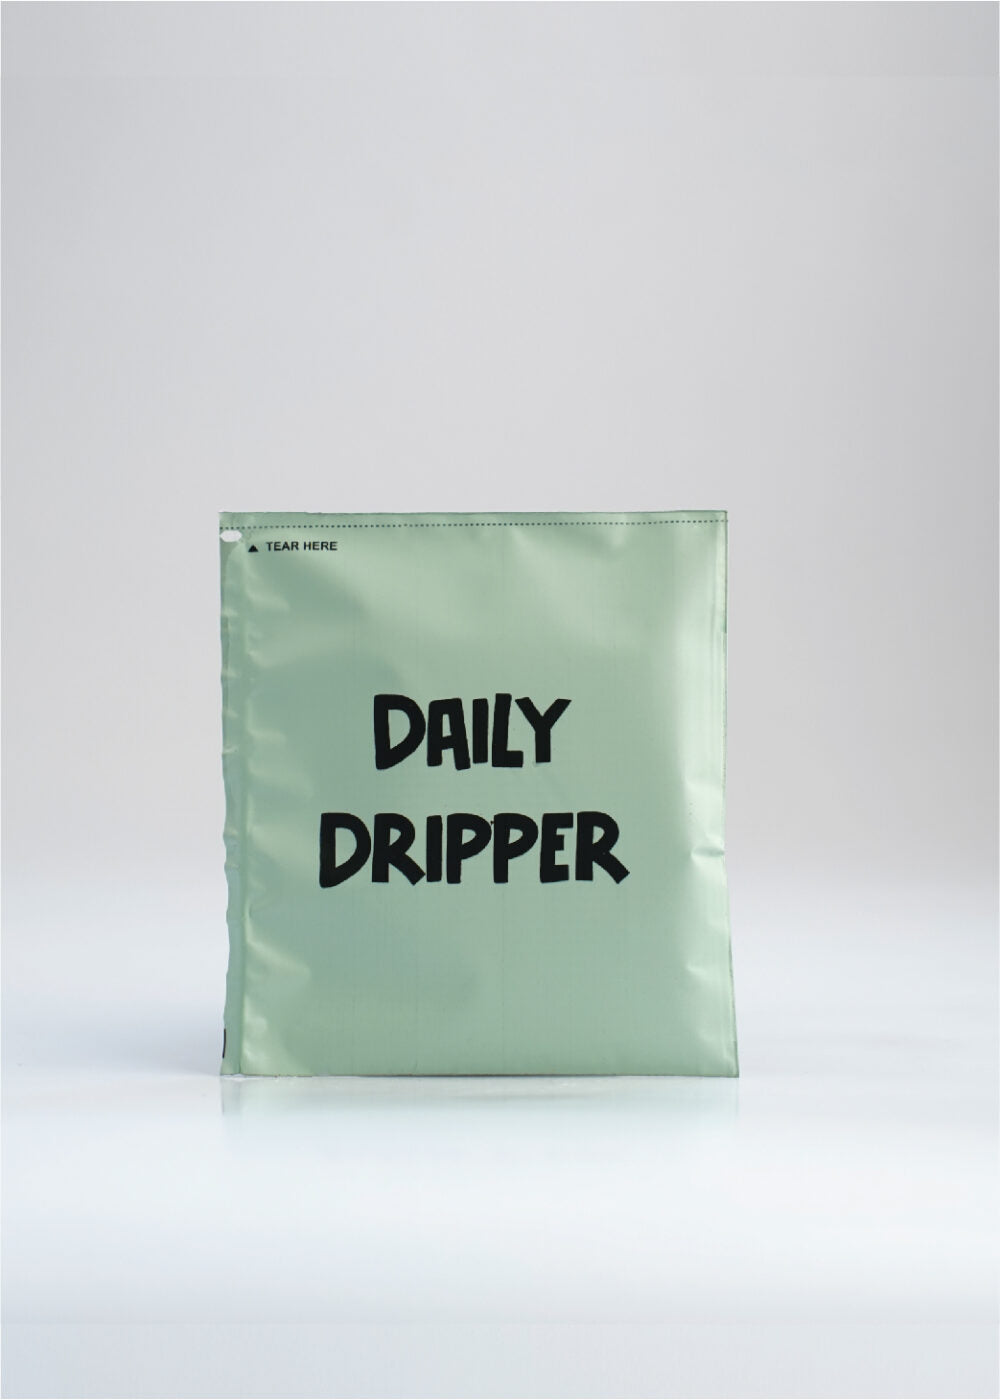 Daily Dripper